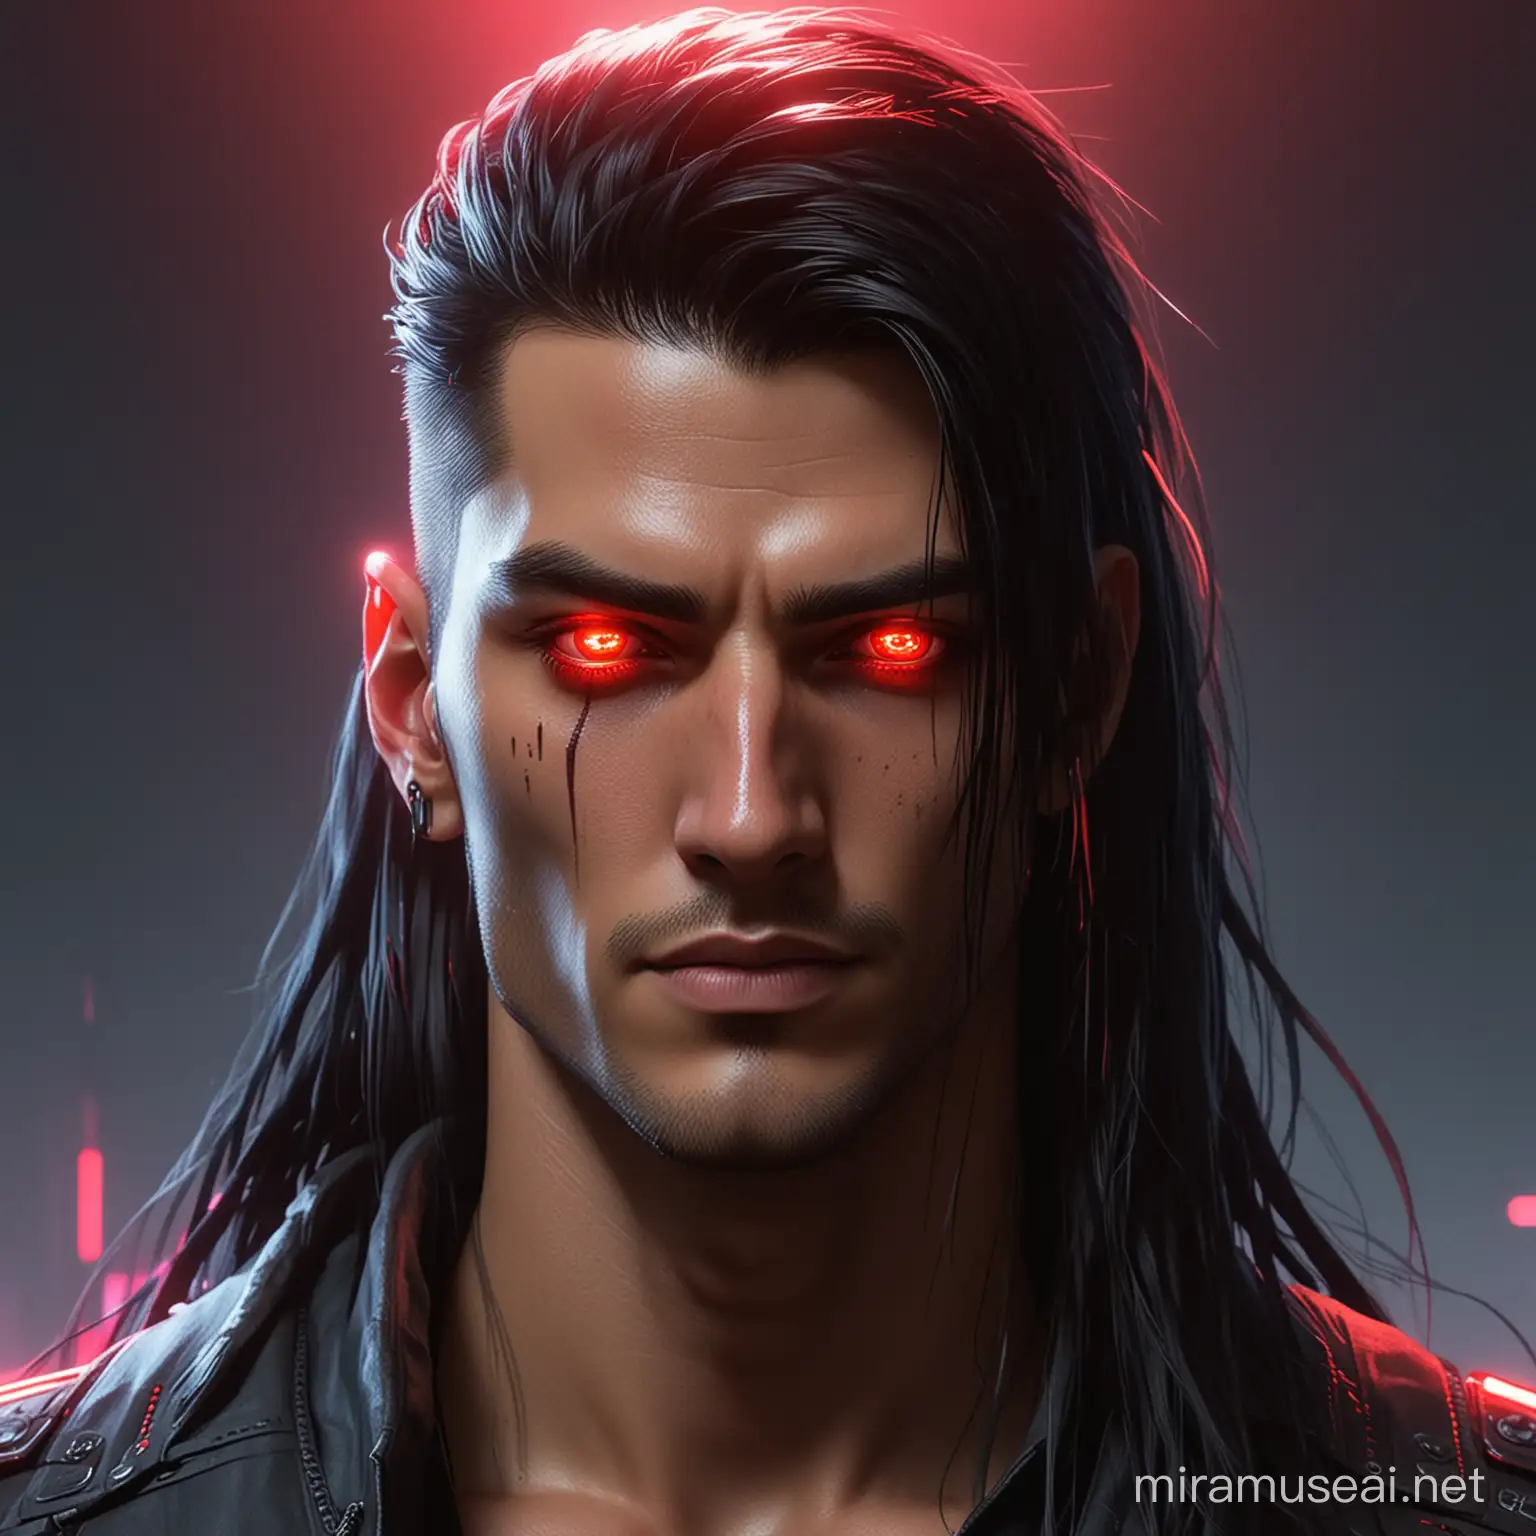 Imposing Cyberpunk Man with Neon Red Eye